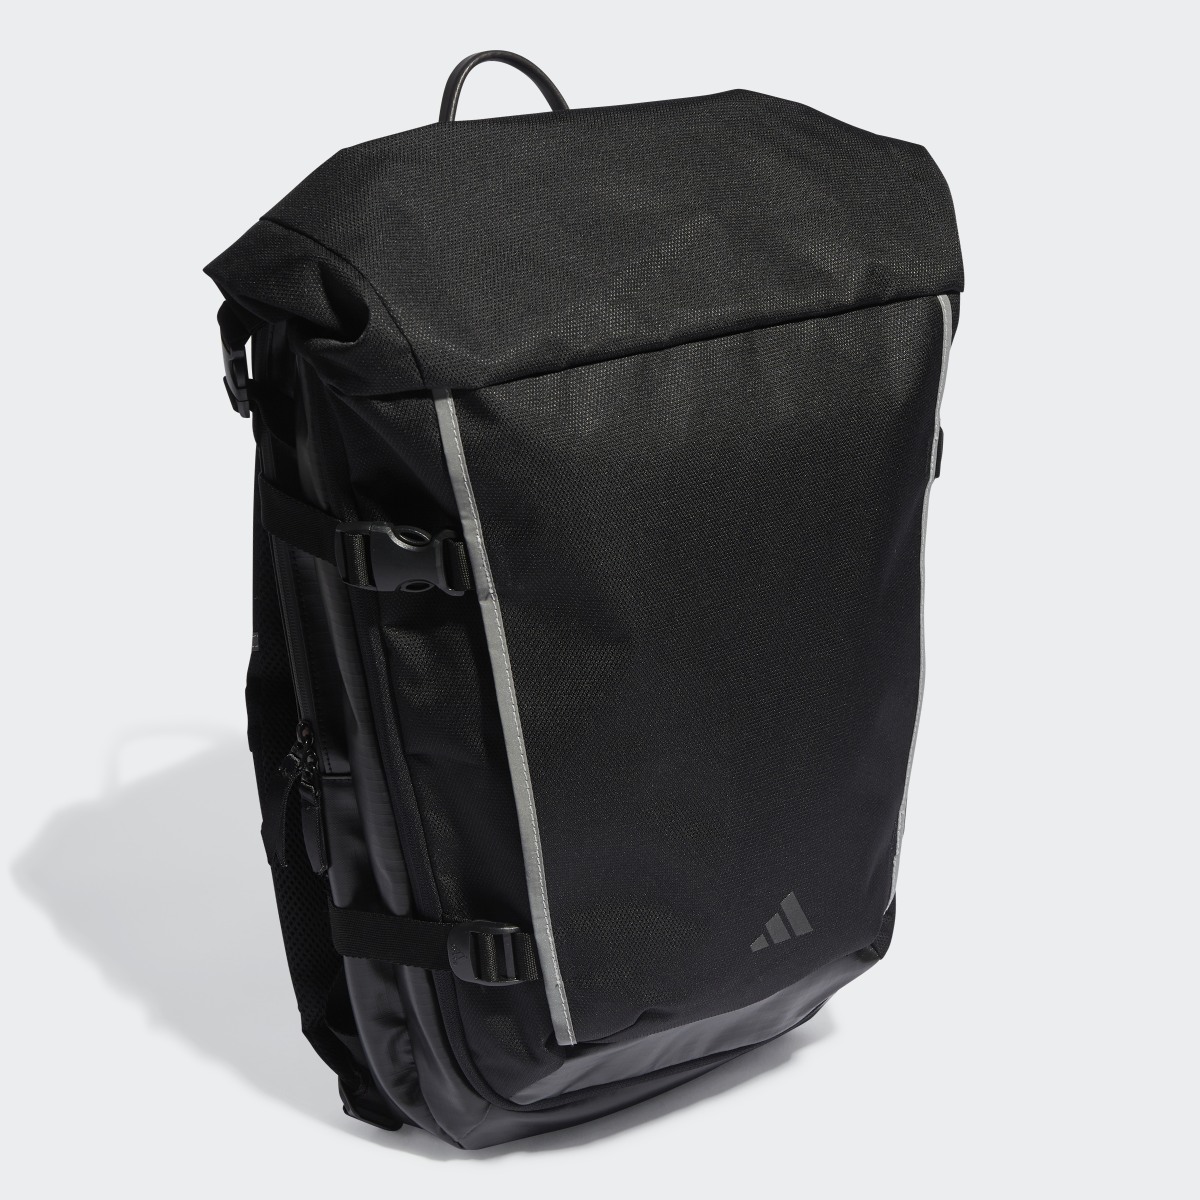 Adidas 4CMTE Backpack. 4